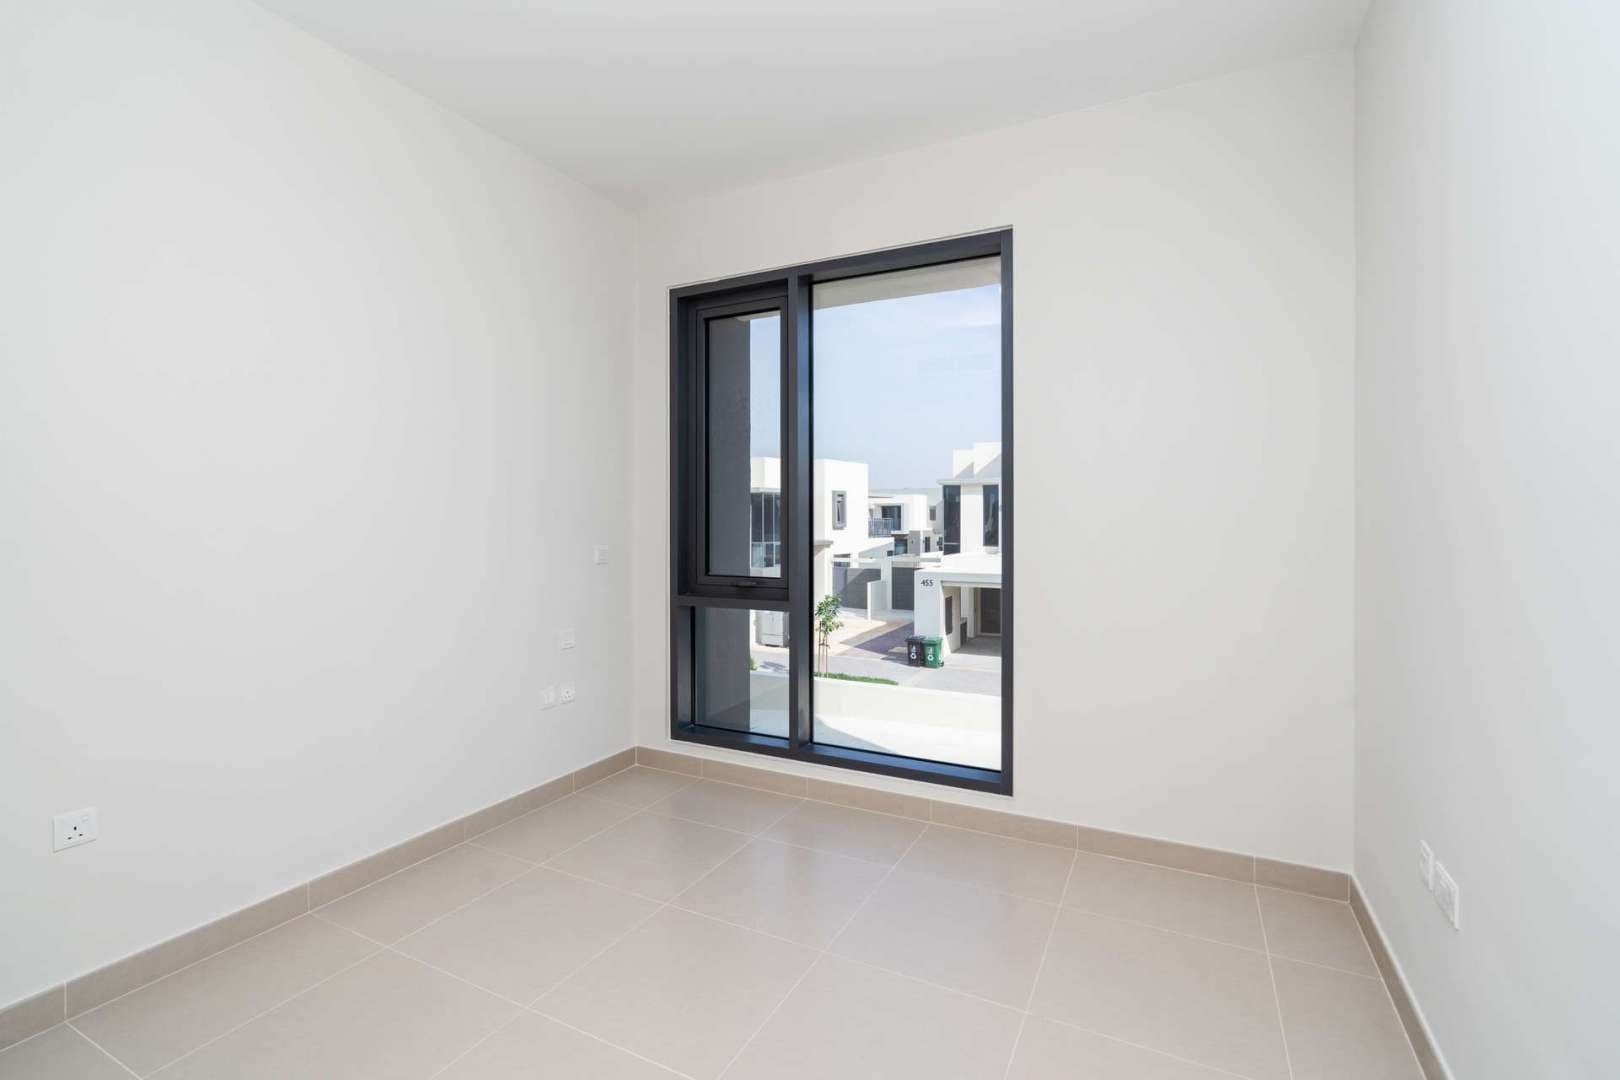 3 Bedroom Townhouse For Rent Maple At Dubai Hills Estate Lp05751 1128c3ec19ead000.jpg